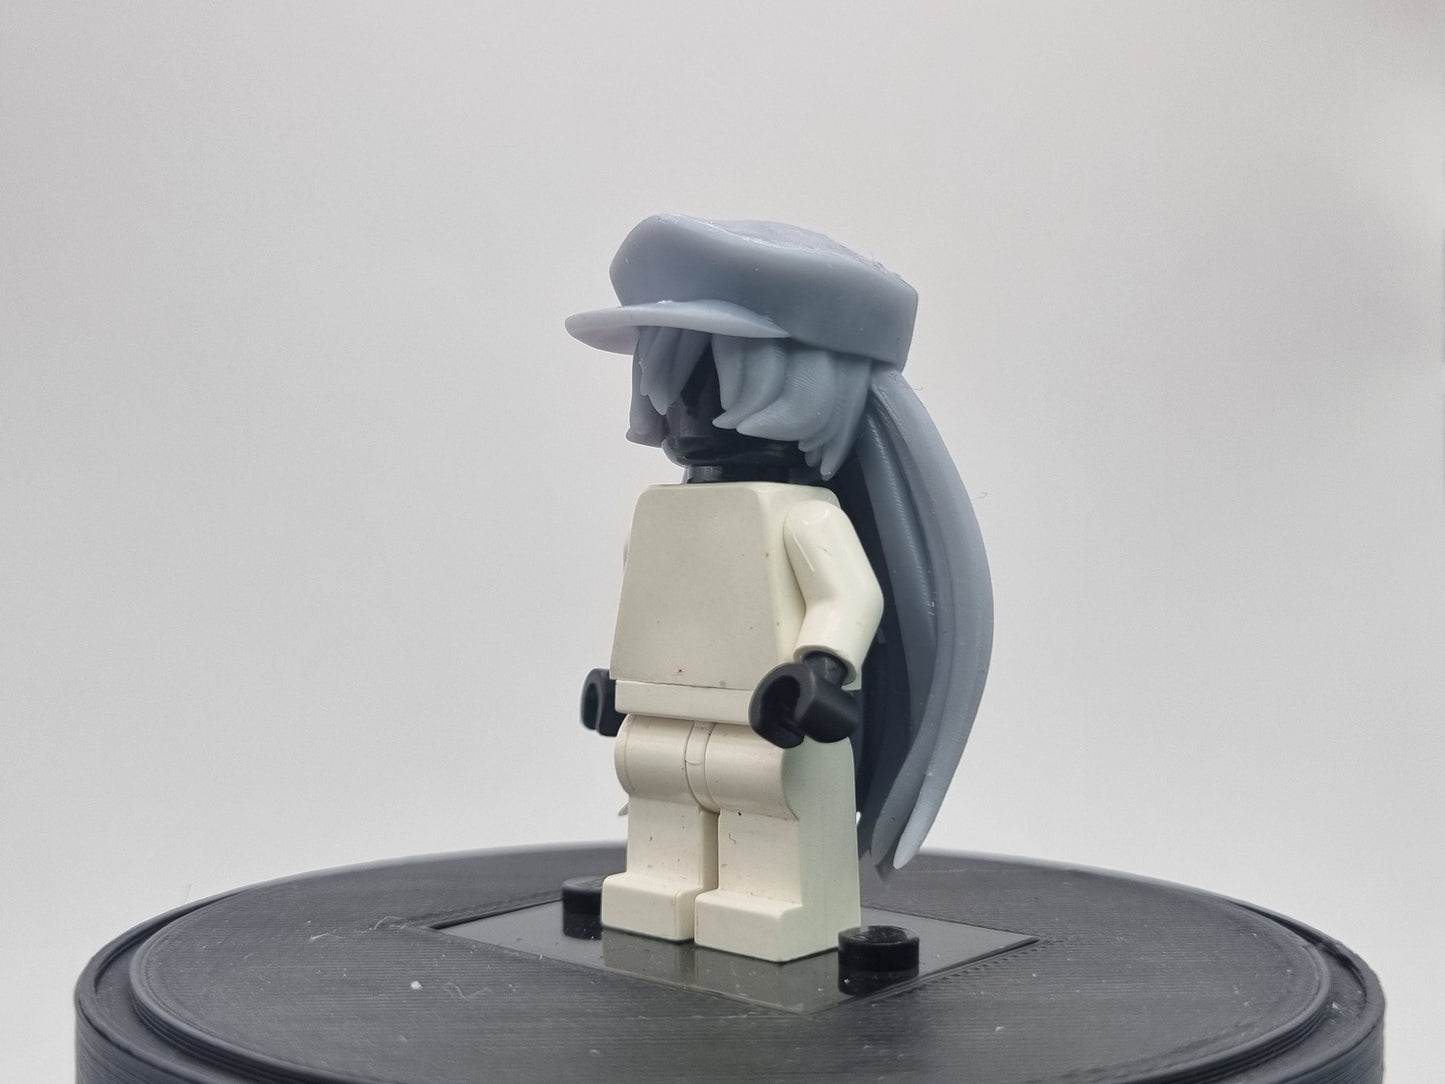 Building toy custom 3D waifu with cap!